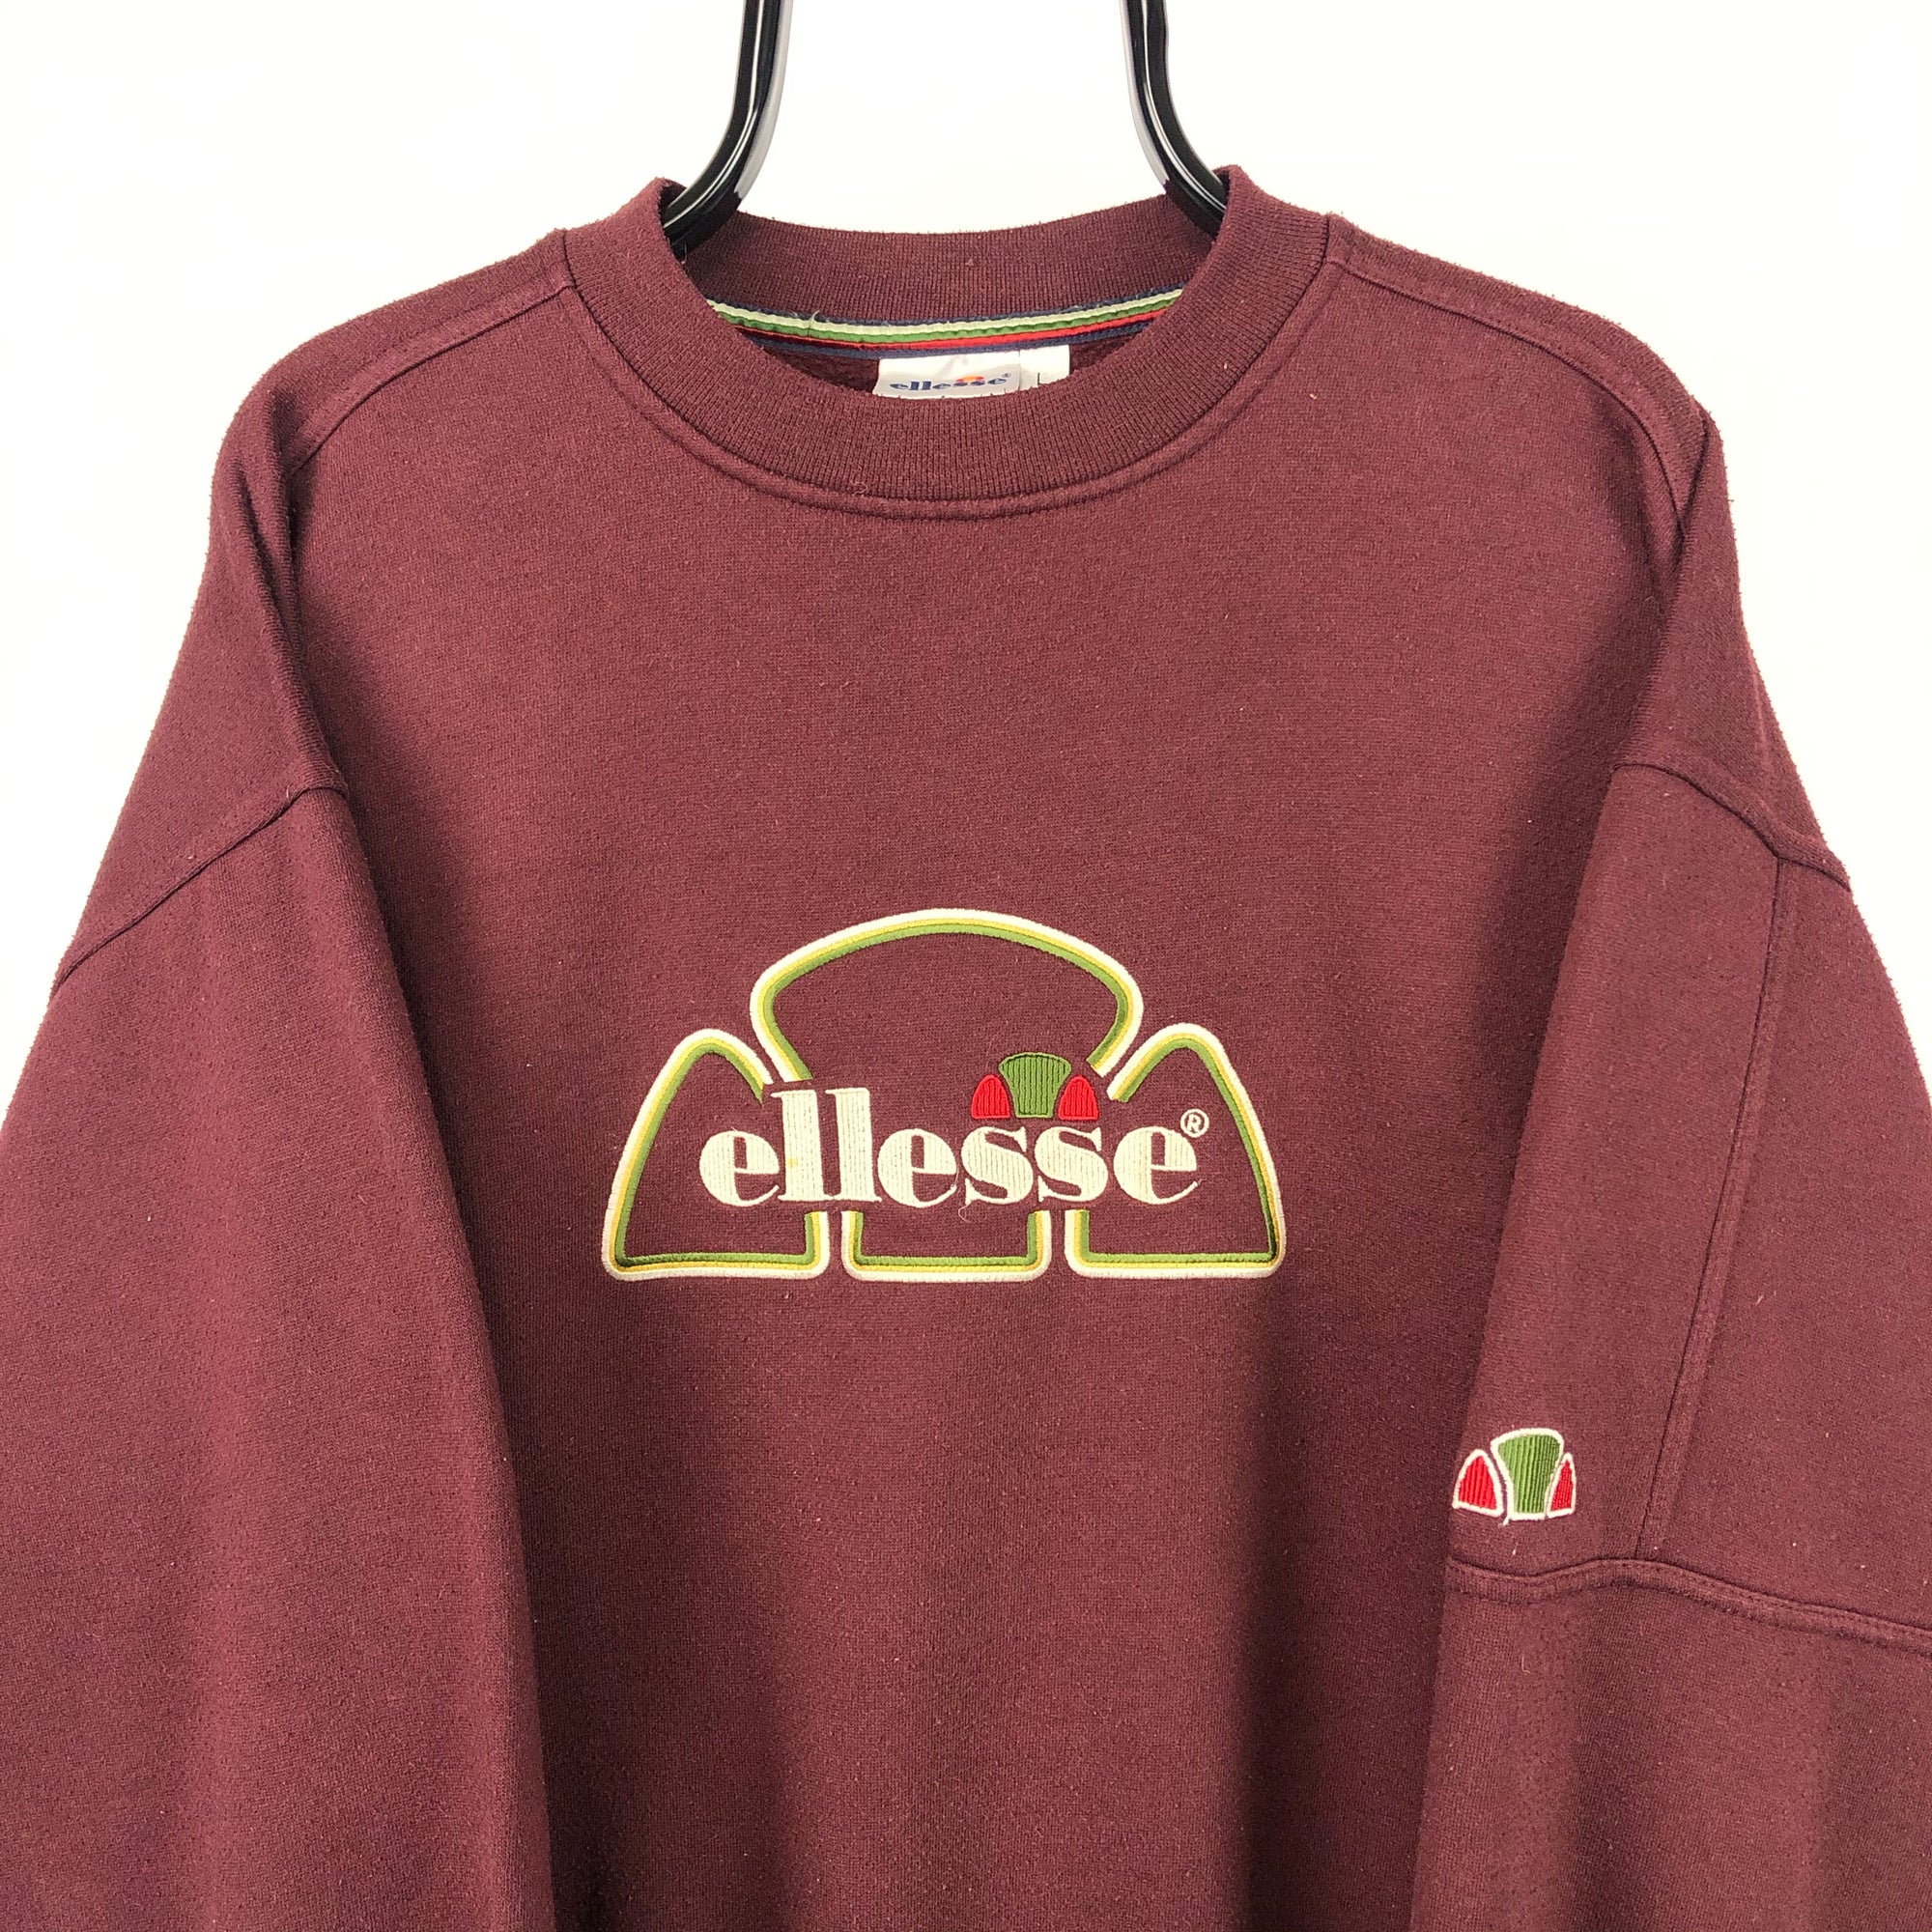 Vintage 90s Ellesse Spellout Sweatshirt in Burgundy - Men’s Large/Women’s XL